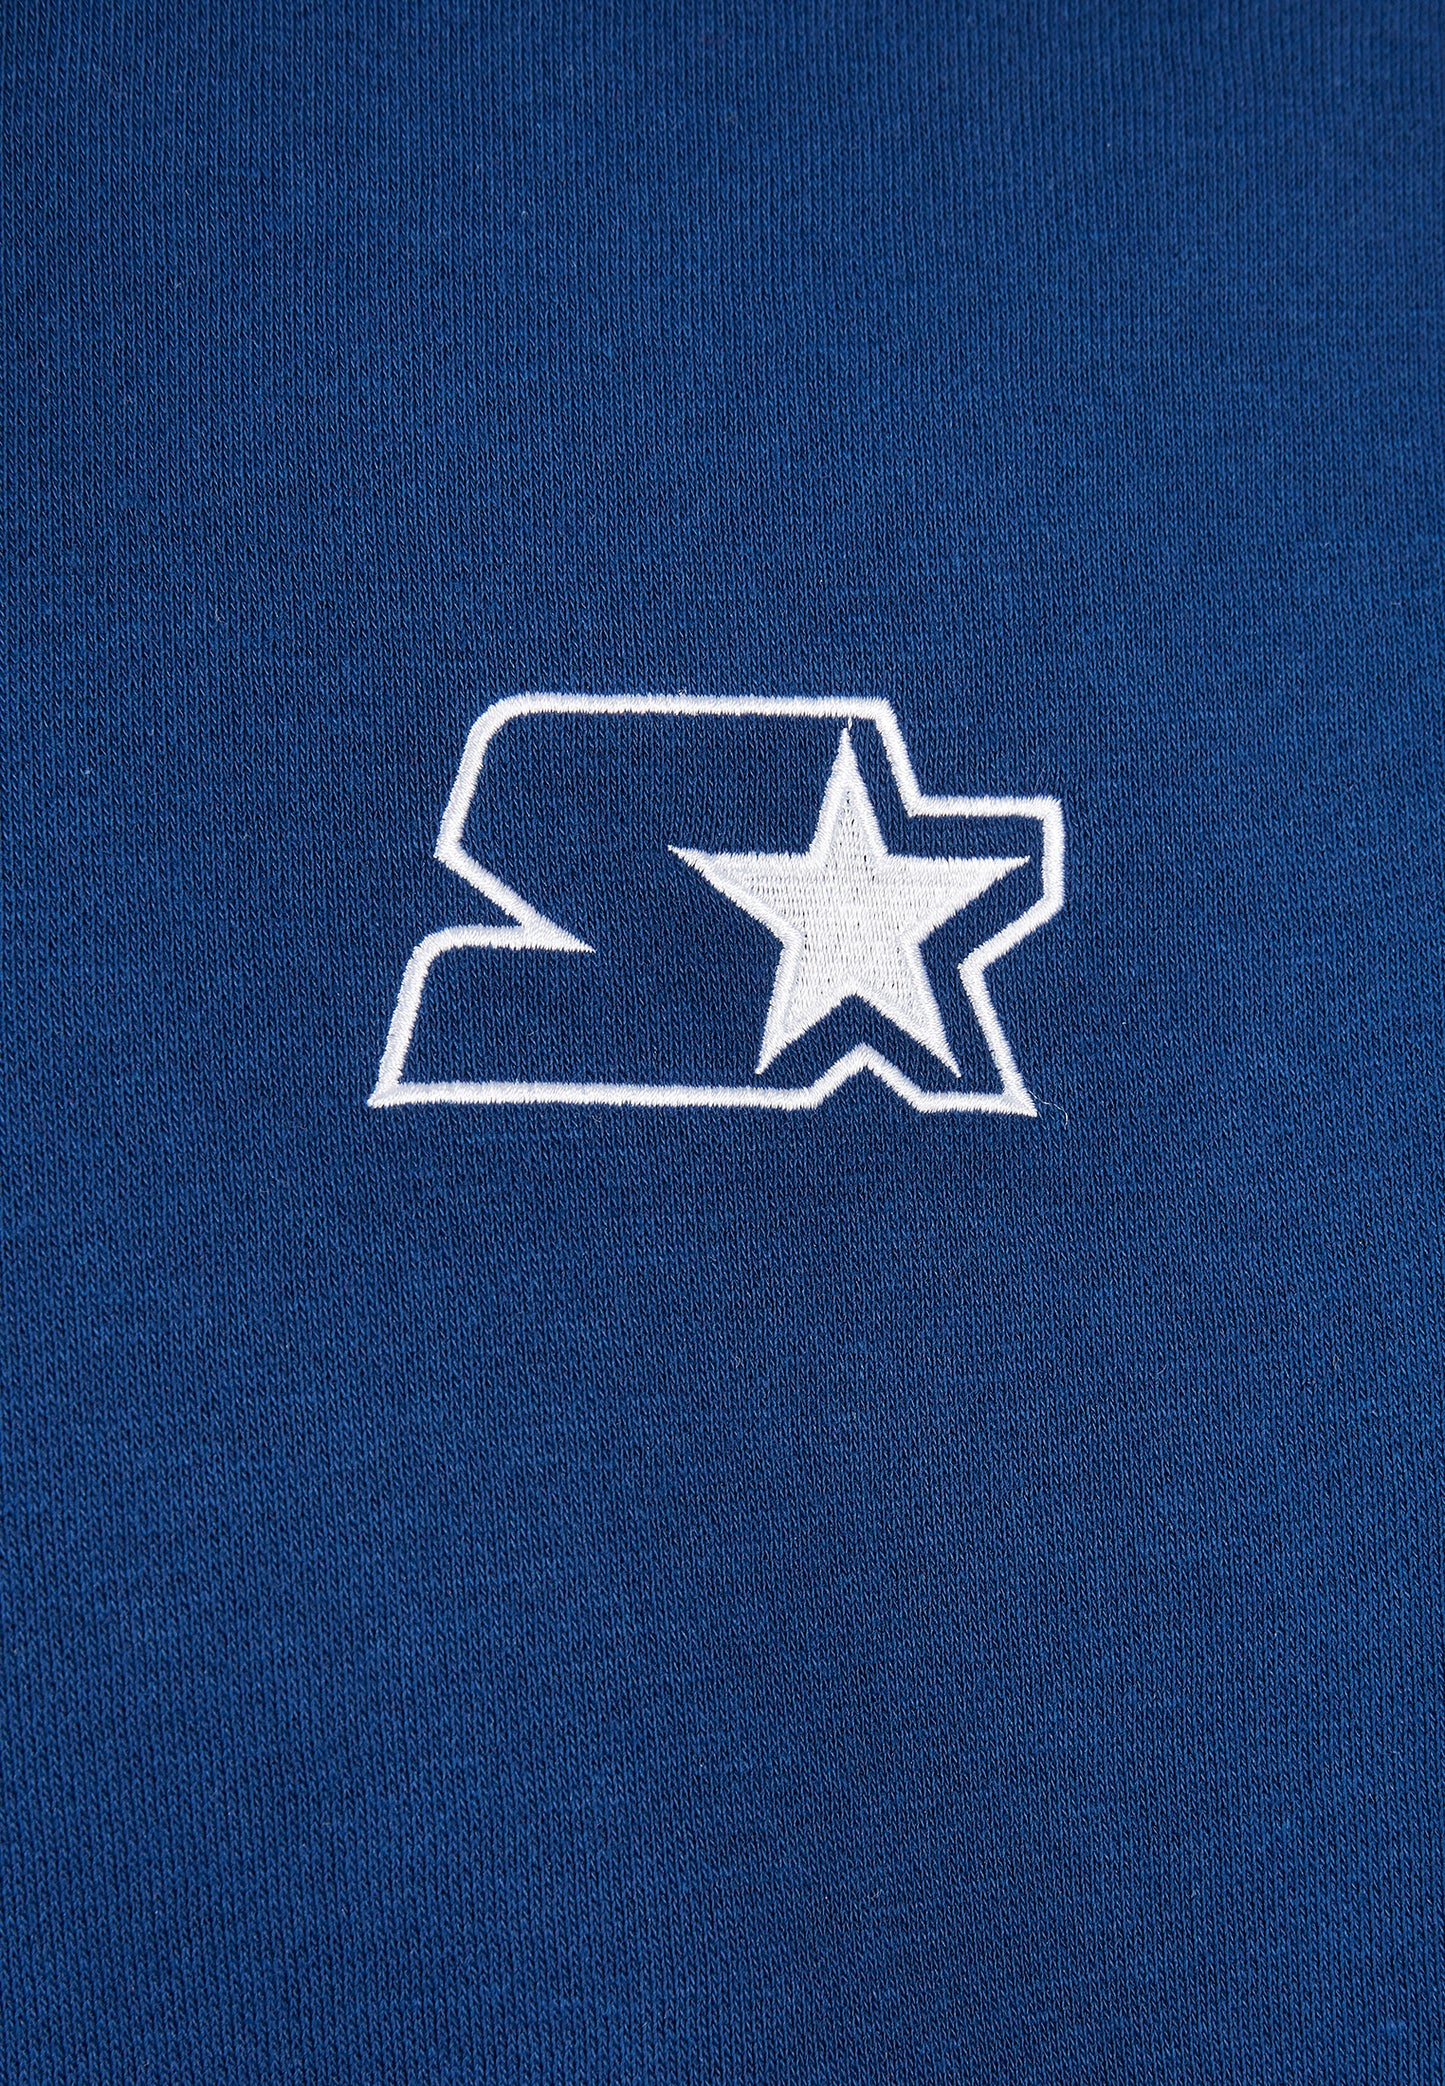 Starter Small Logo Herren Hoody blau